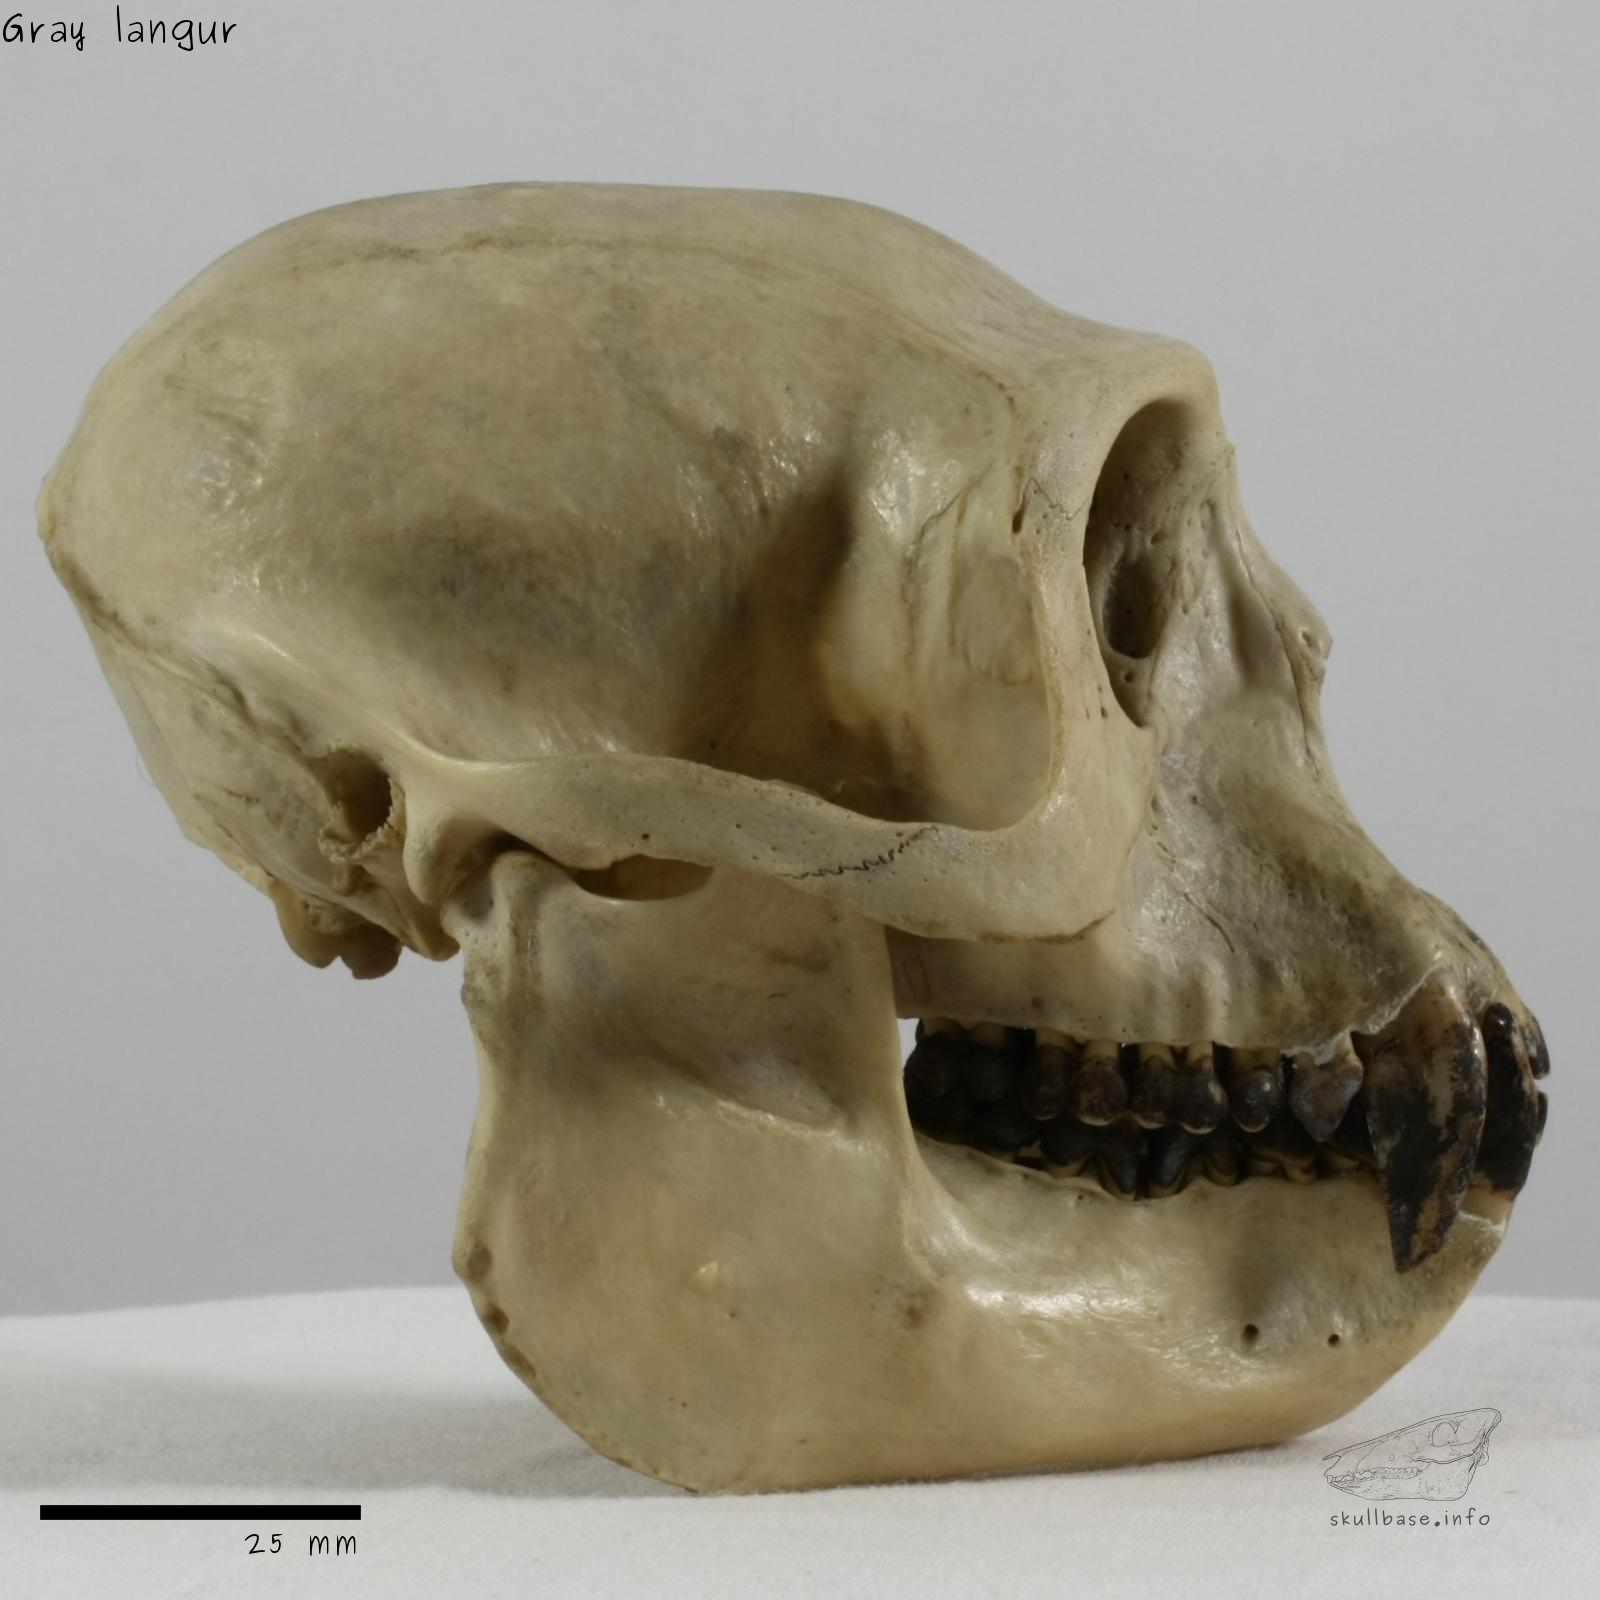 Gray langur (Semnopithecus entellus) skull lateral view